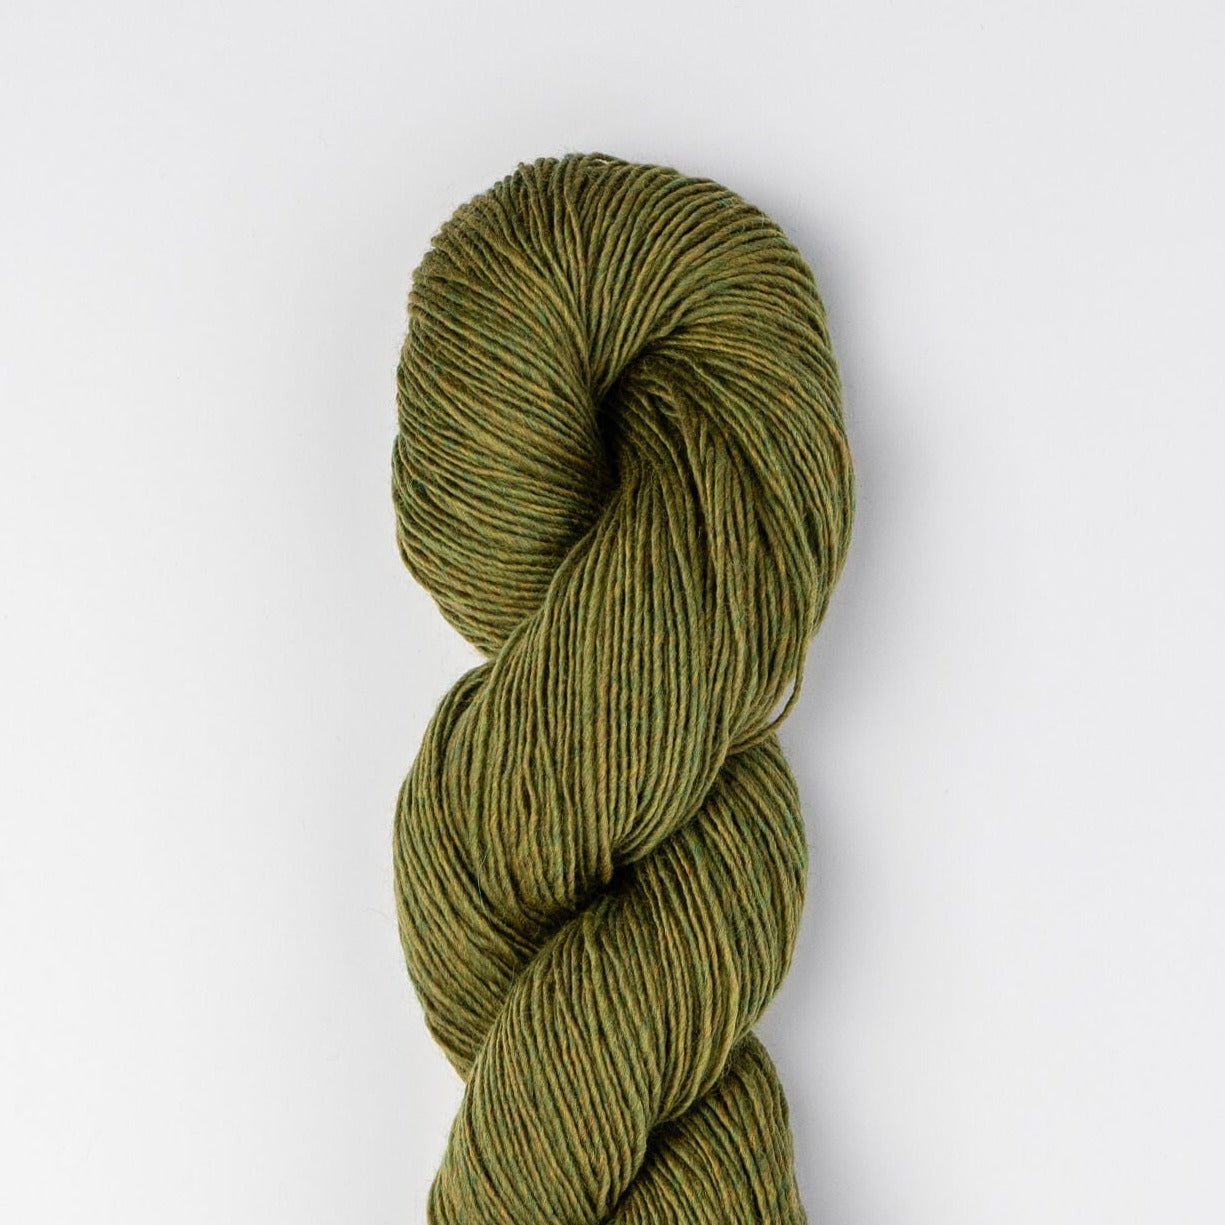 Tivoli Shawl Knitting Kit - Mary Pranica - 2309 Earth Ivy - The Little Yarn Store